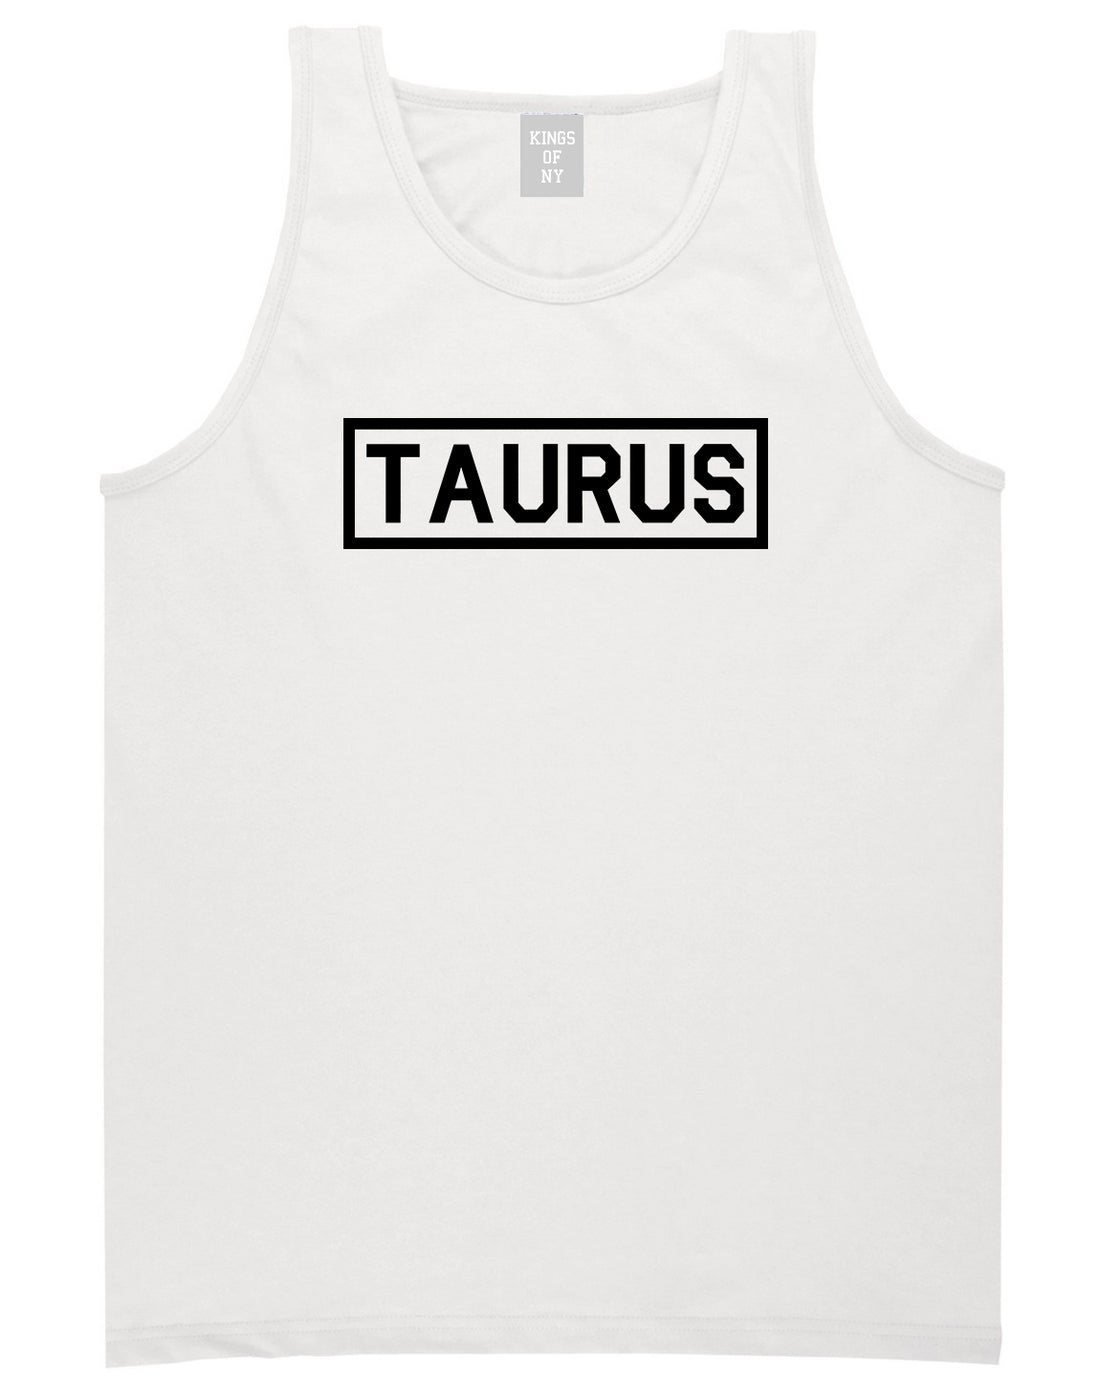 Taurus Horoscope Sign Mens White Tank Top Shirt by KINGS OF NY